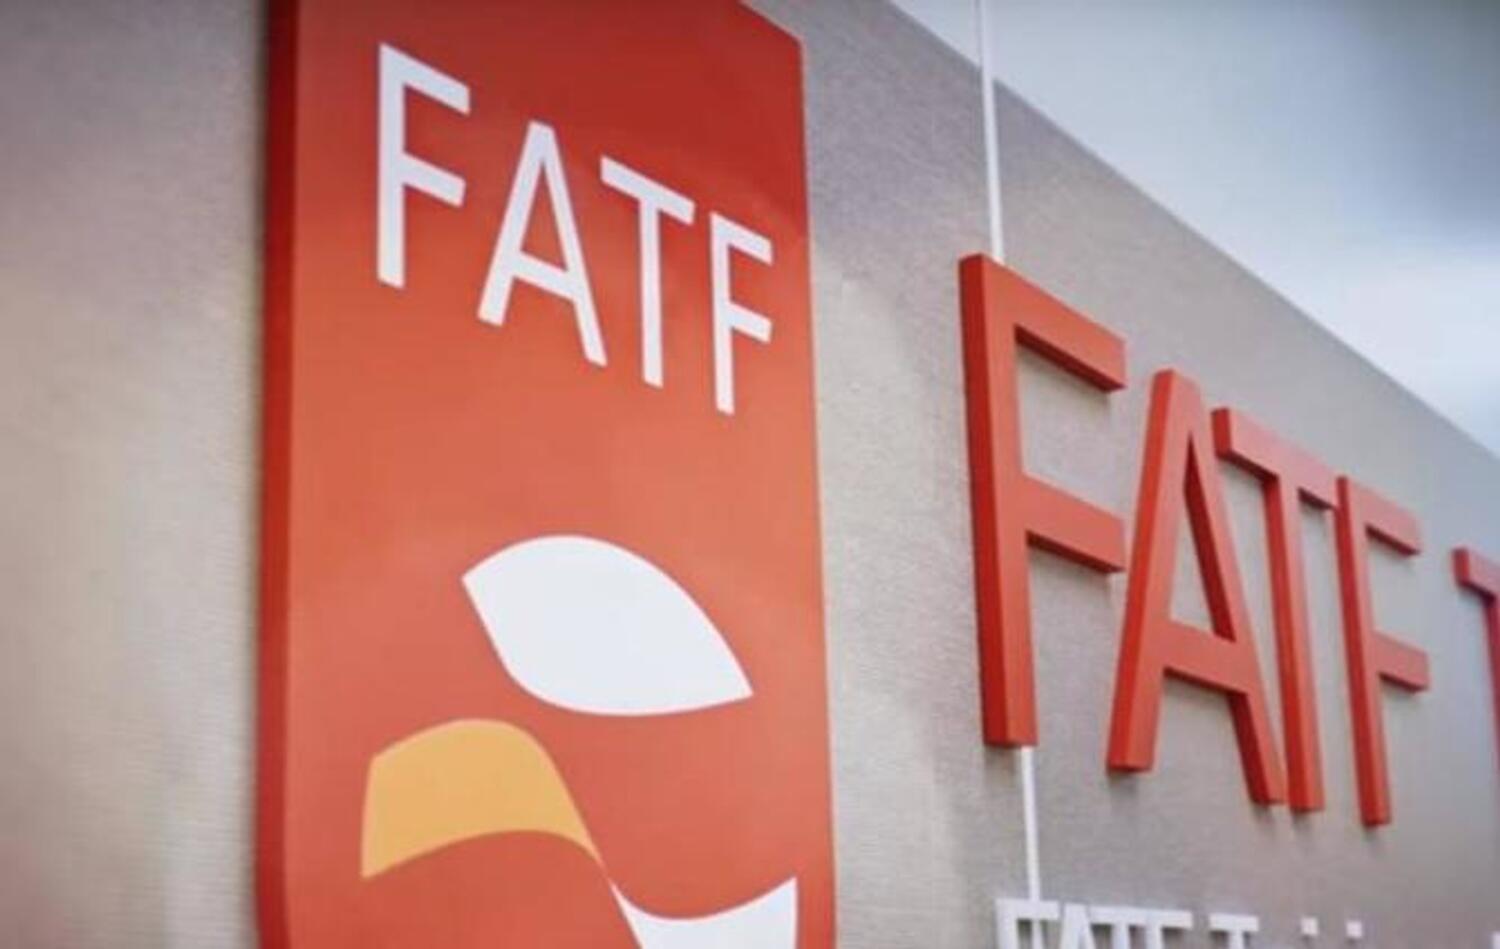 Отмыванием денег фатф. (Financial Action task Force) — фатф. FATF логотип. Россия и фатф. Фатф здание.